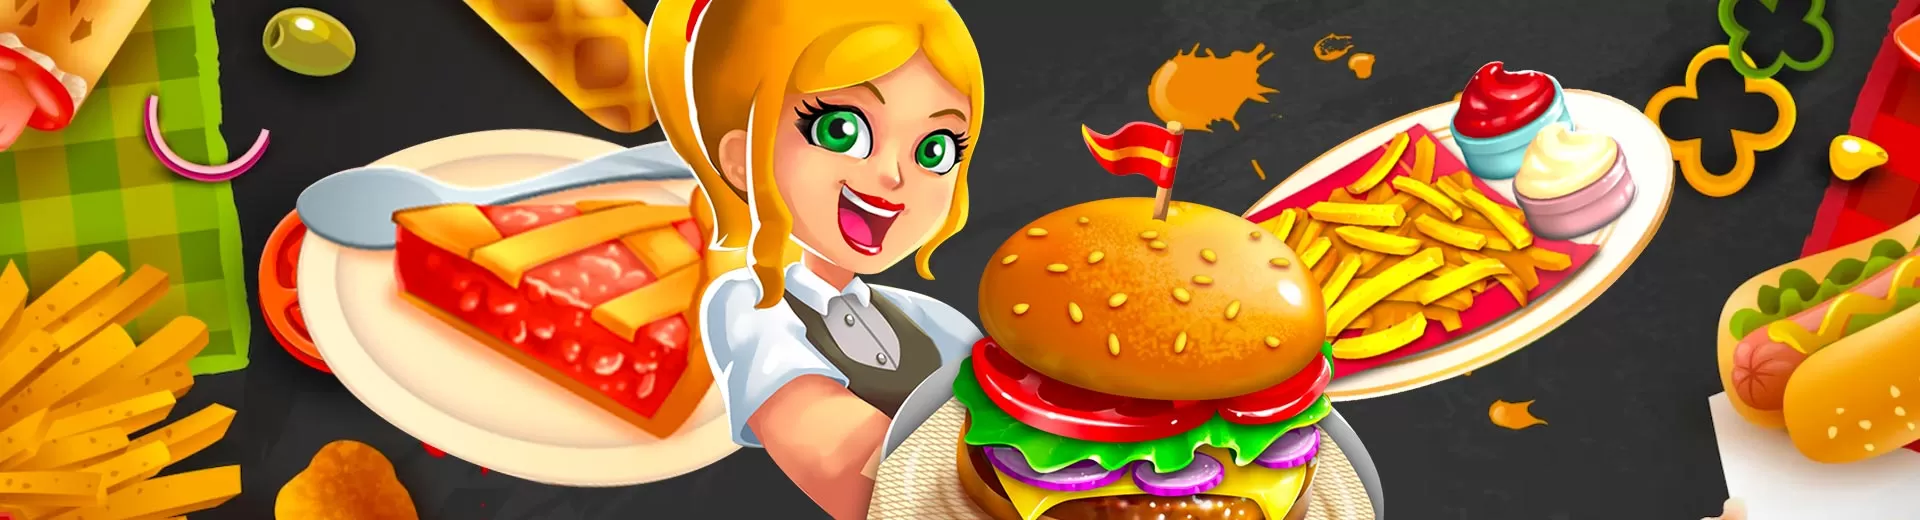 My Burger Shop 2 Emulator Pc